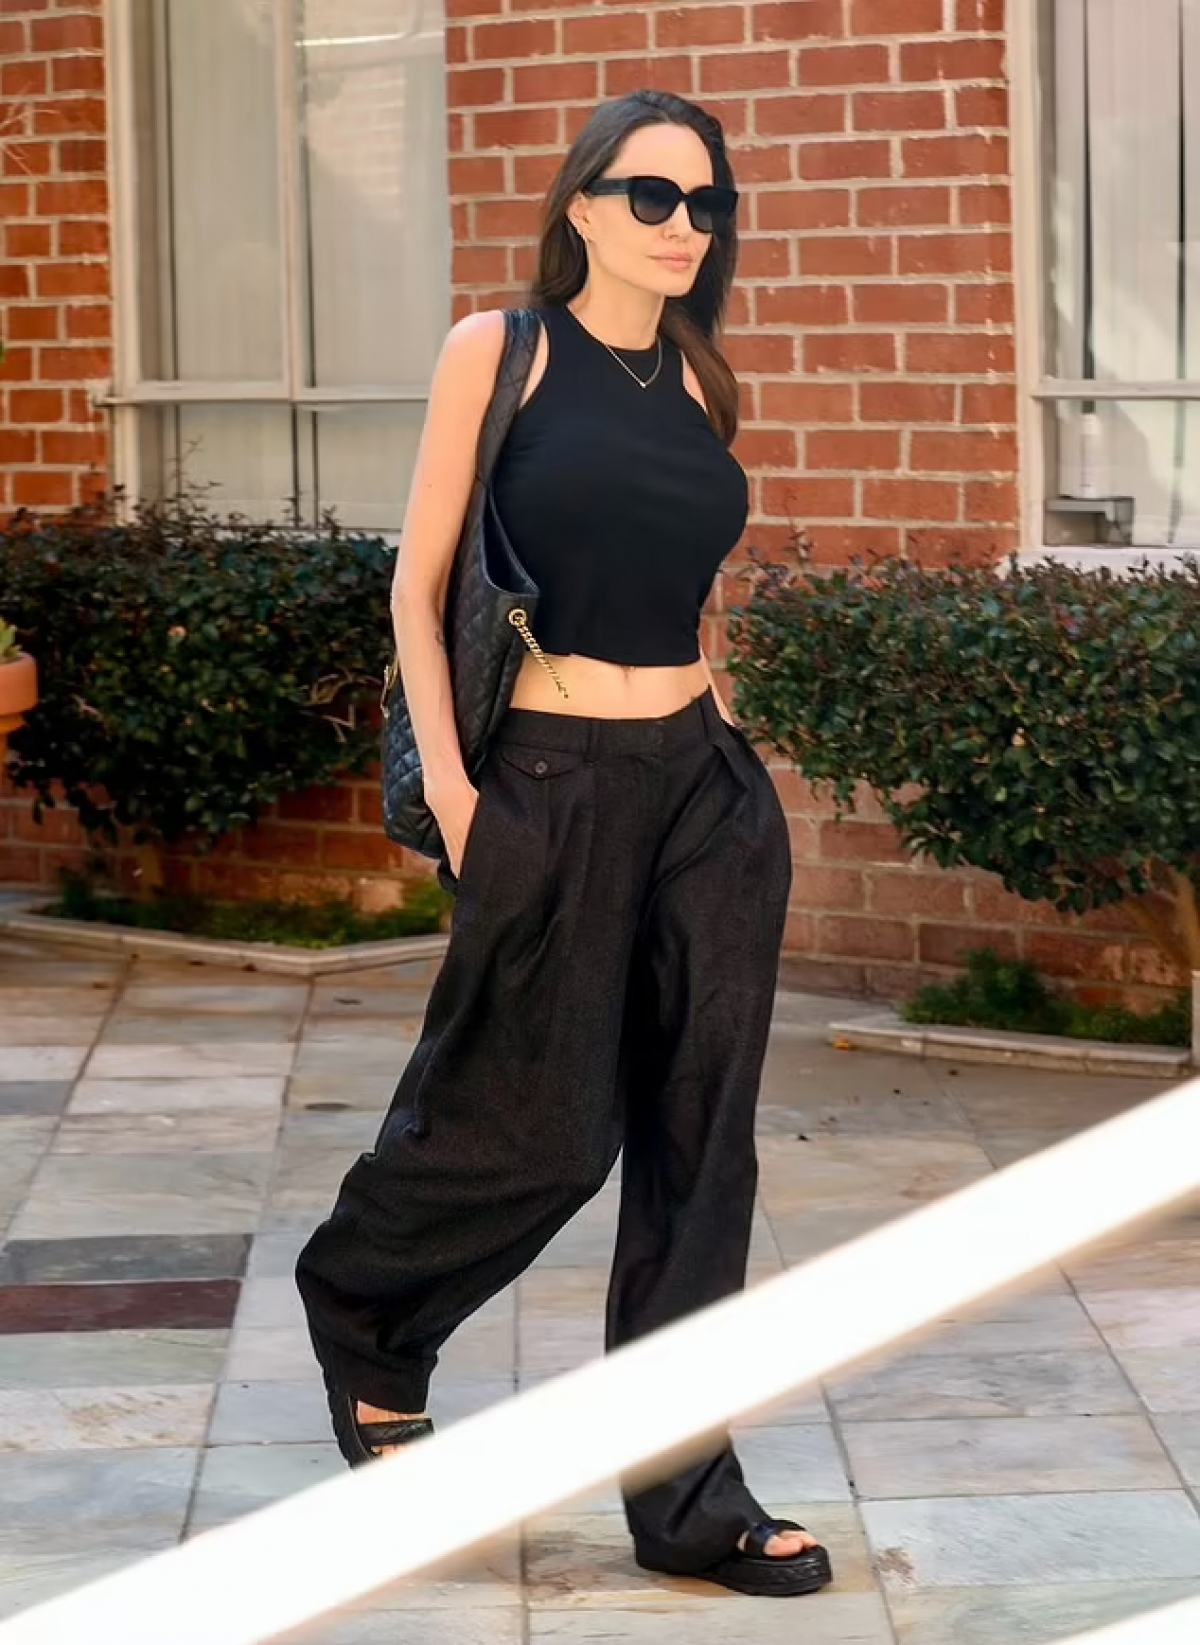 Angelina Jolie wears a crop top showing off her slim waist on the street - Photo 3.